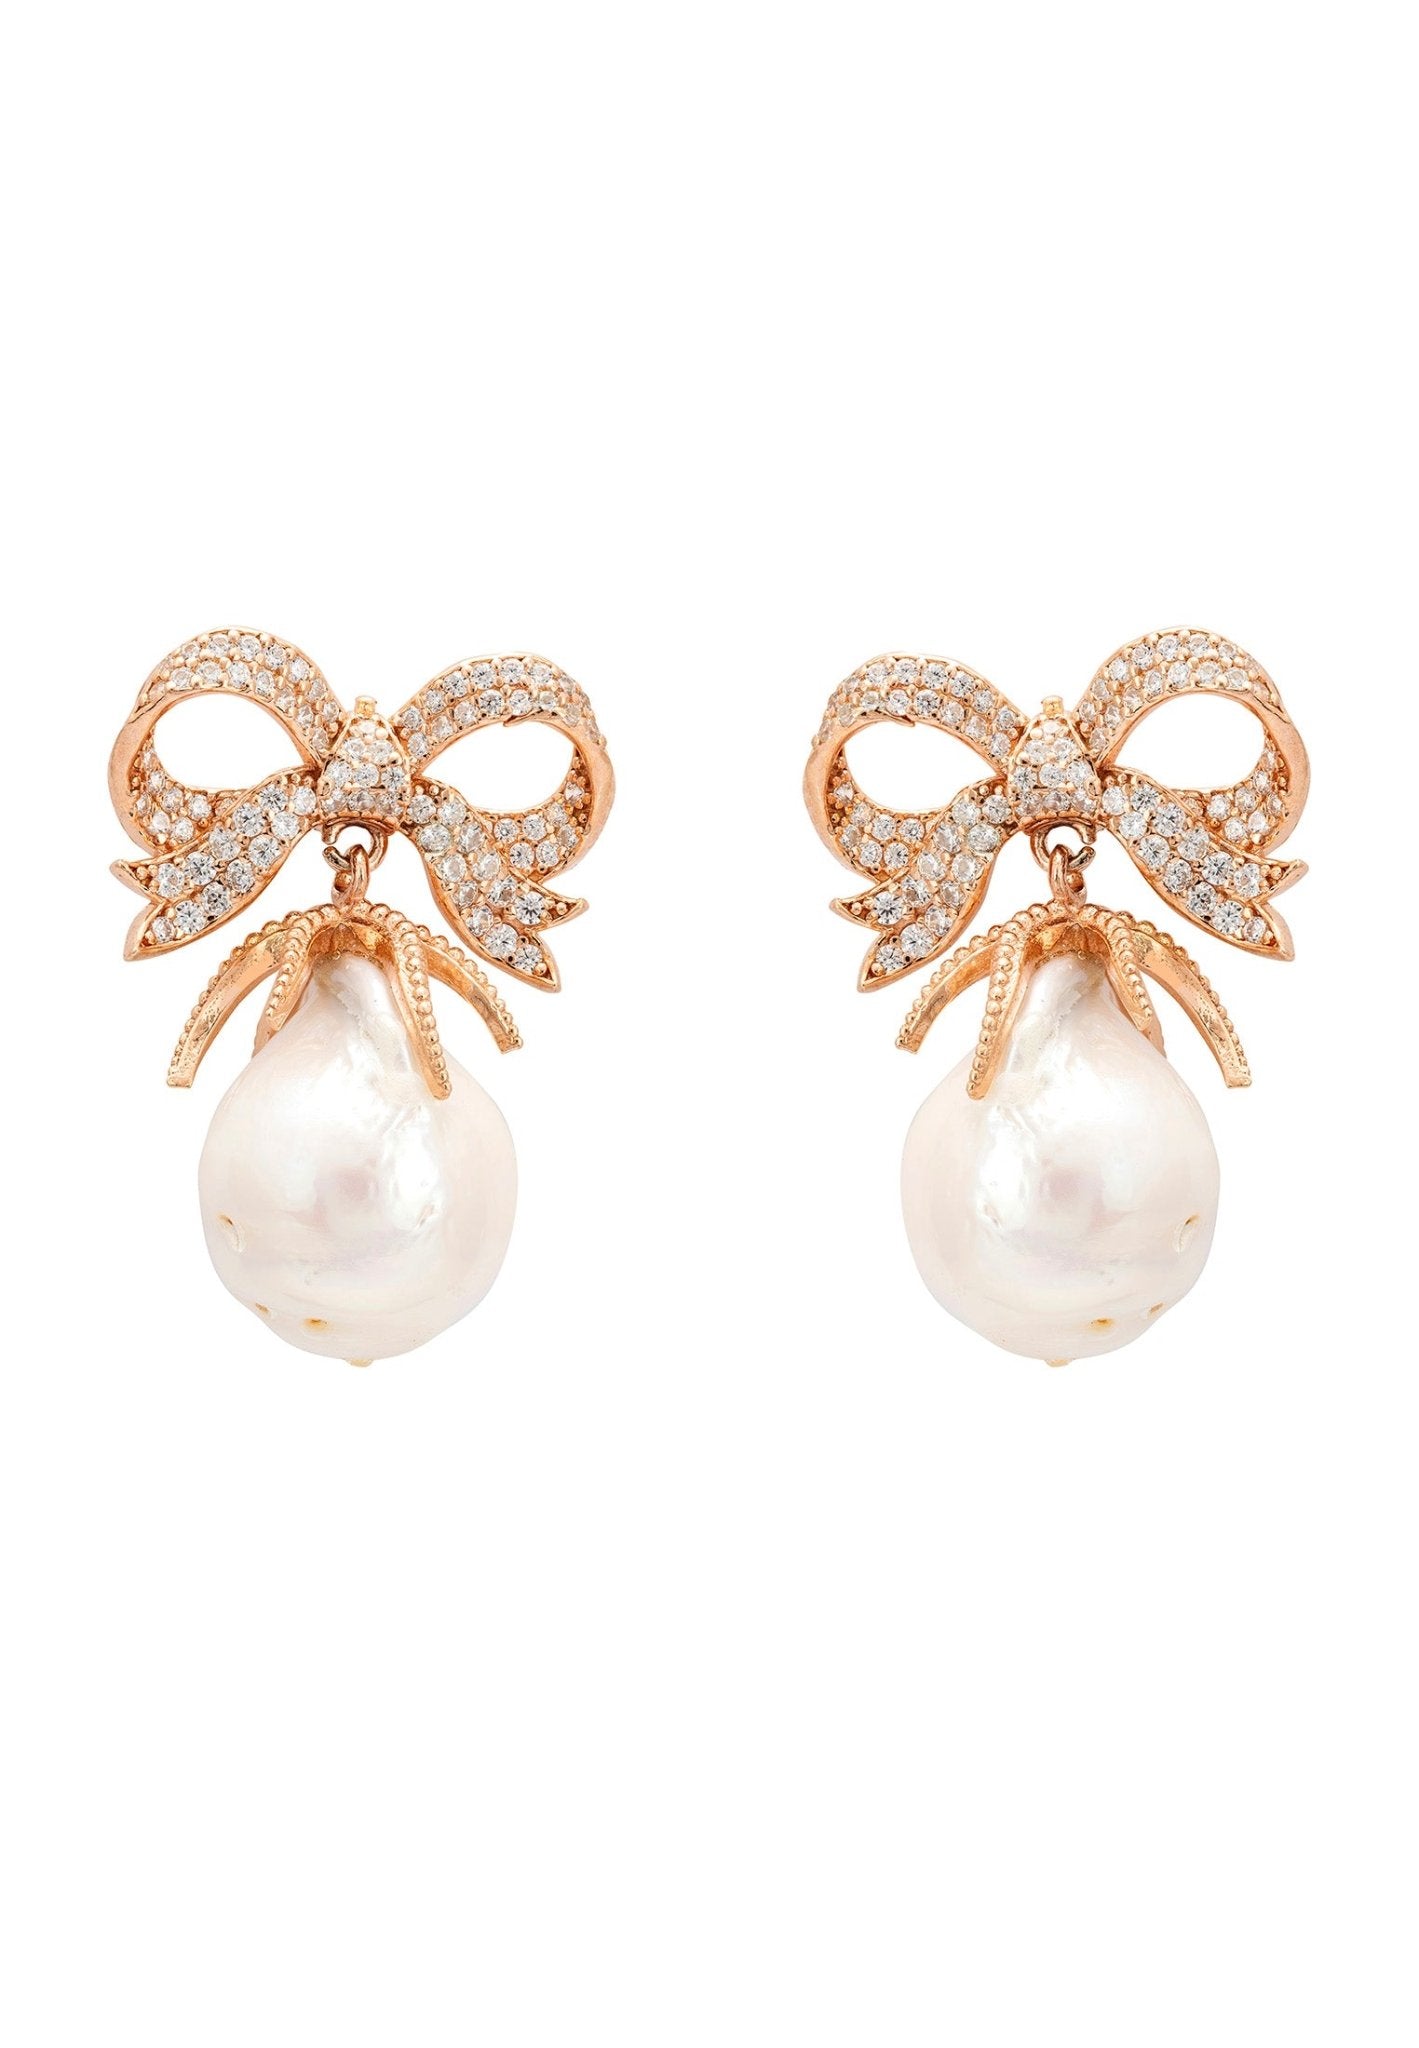 Baroque Pearl Ribbon And Bows Drop Earrings Rosegold - LATELITA Earrings